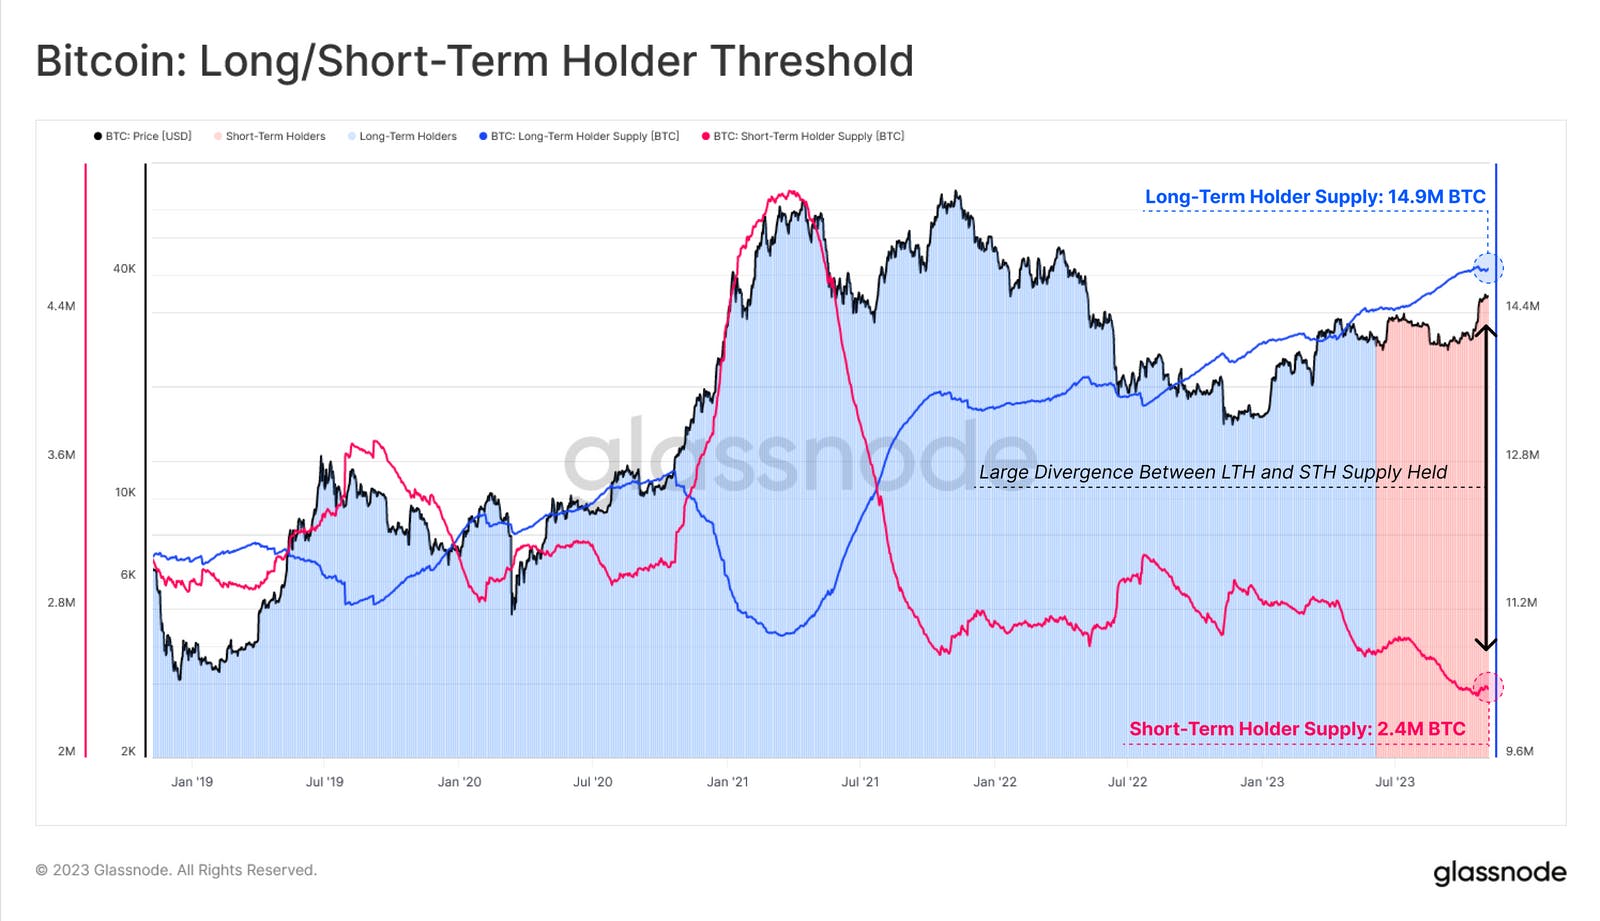 BTC long/short-term holders